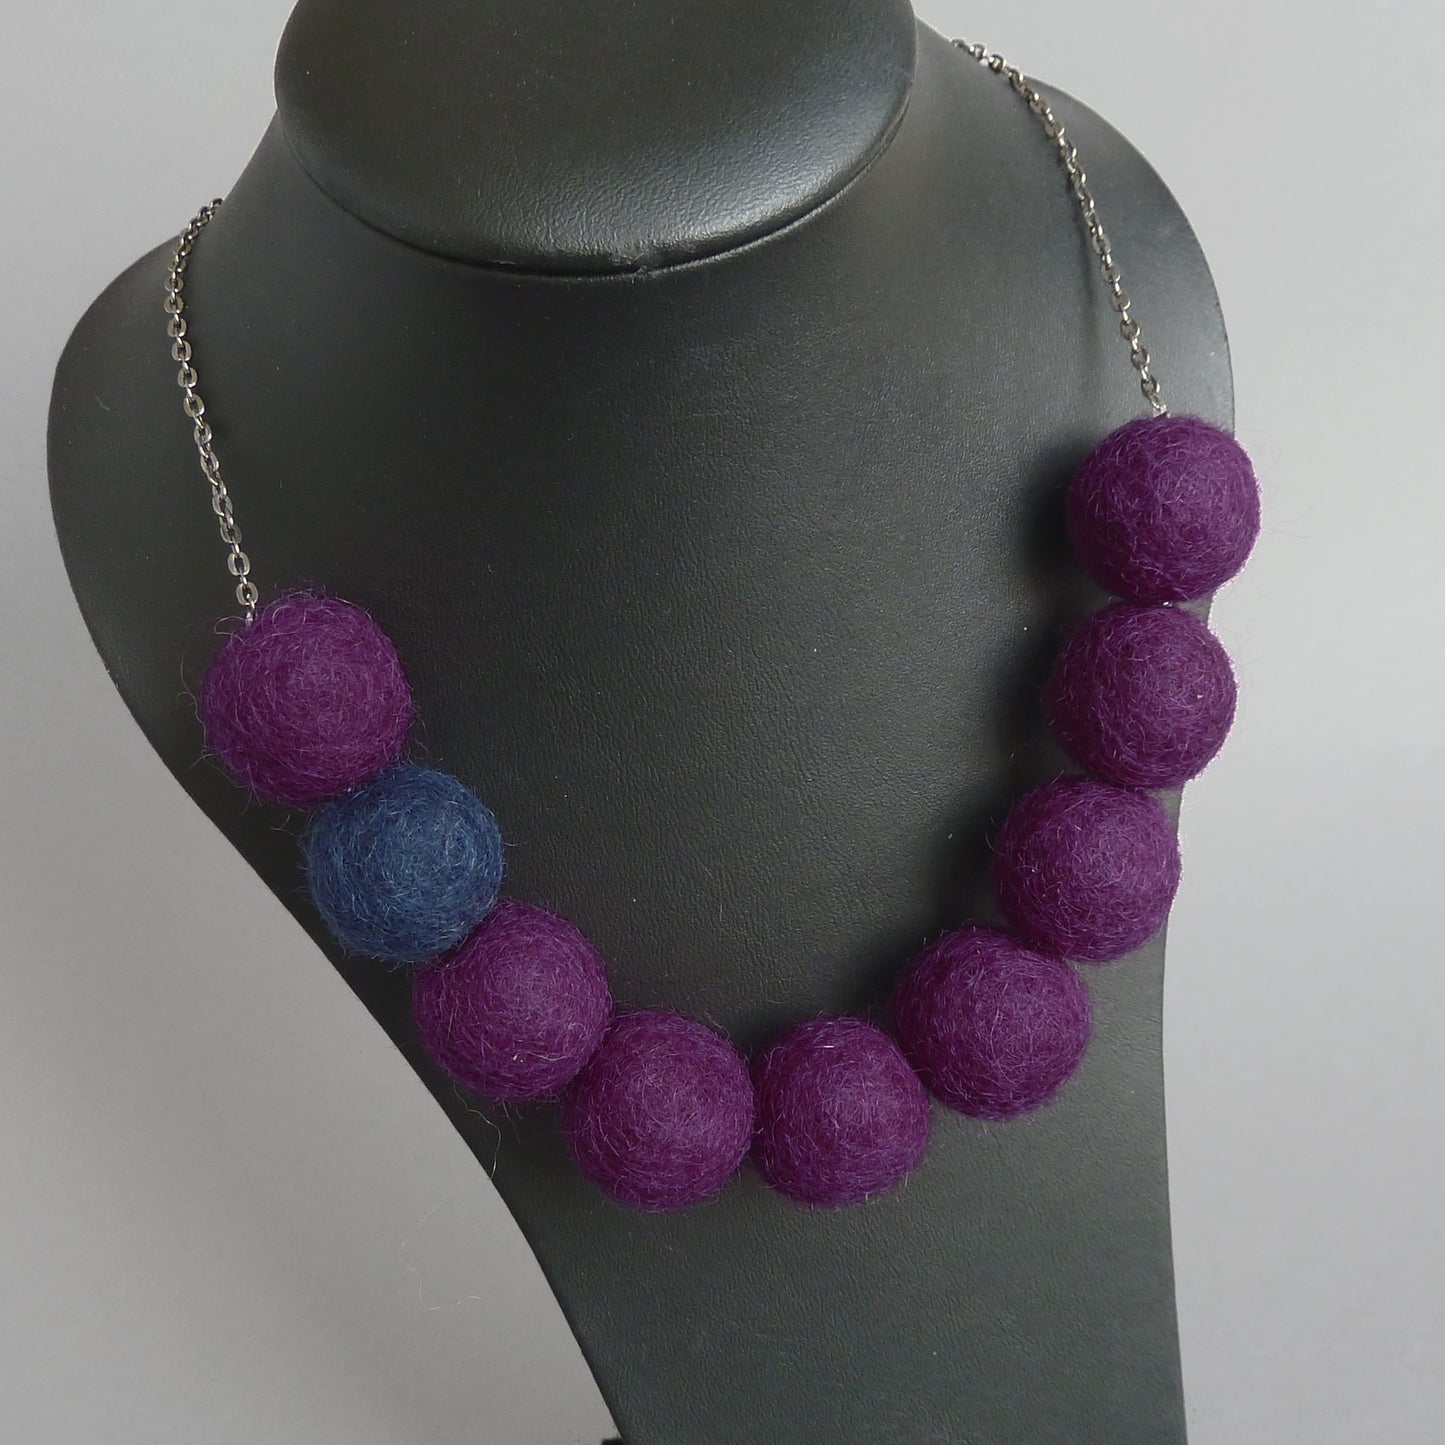 Chunky purple necklace